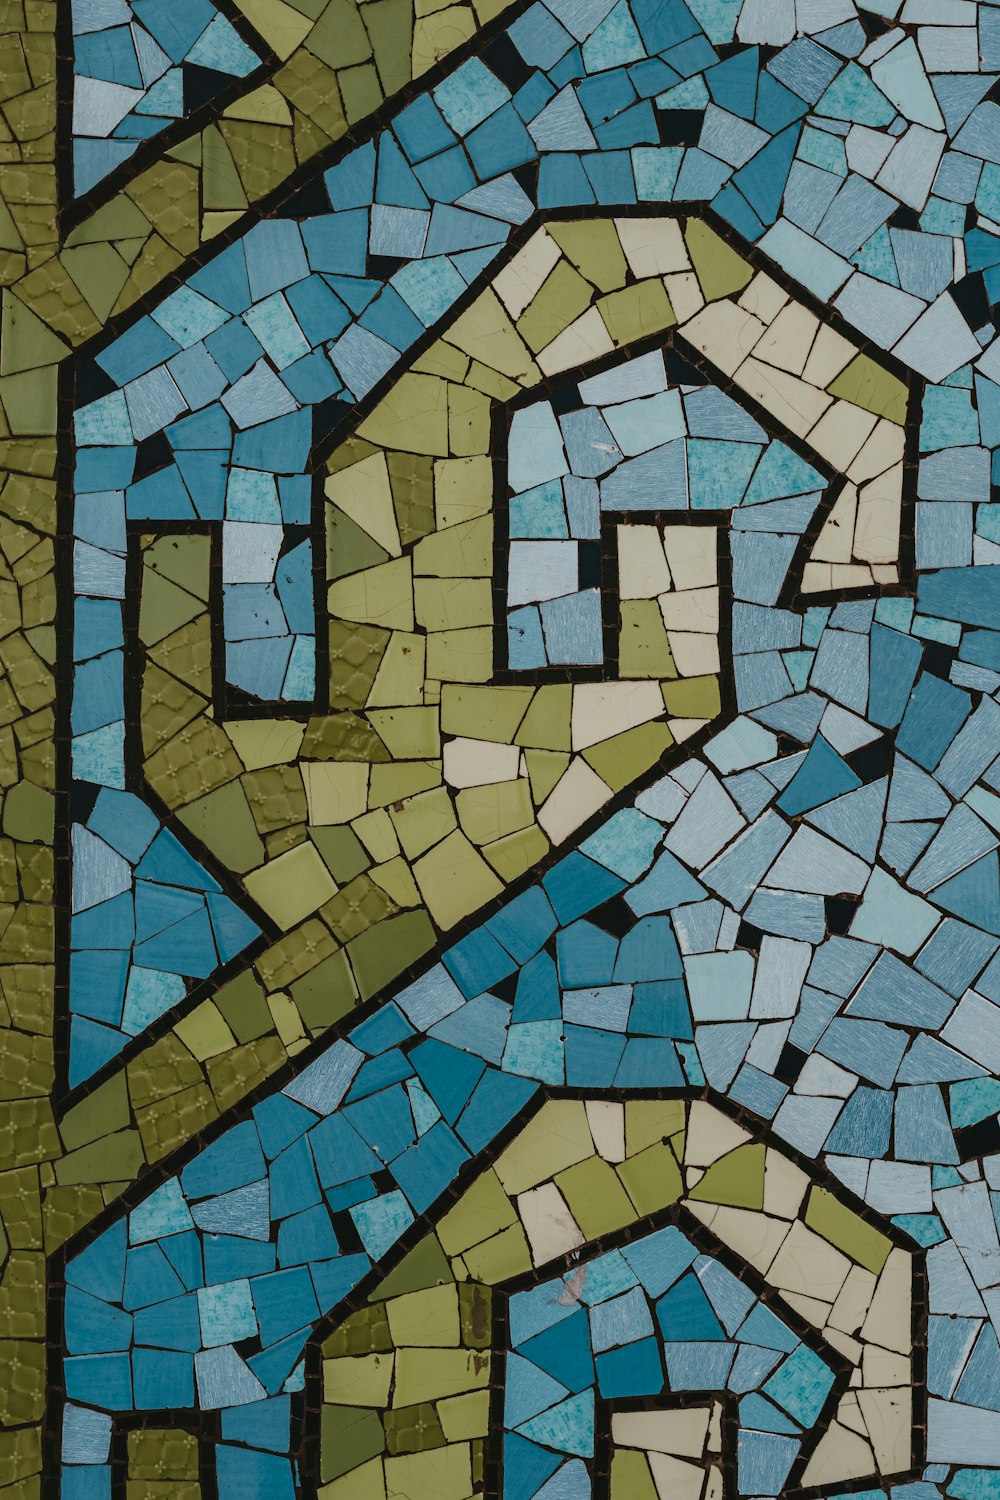 a close up of a mosaic tile design